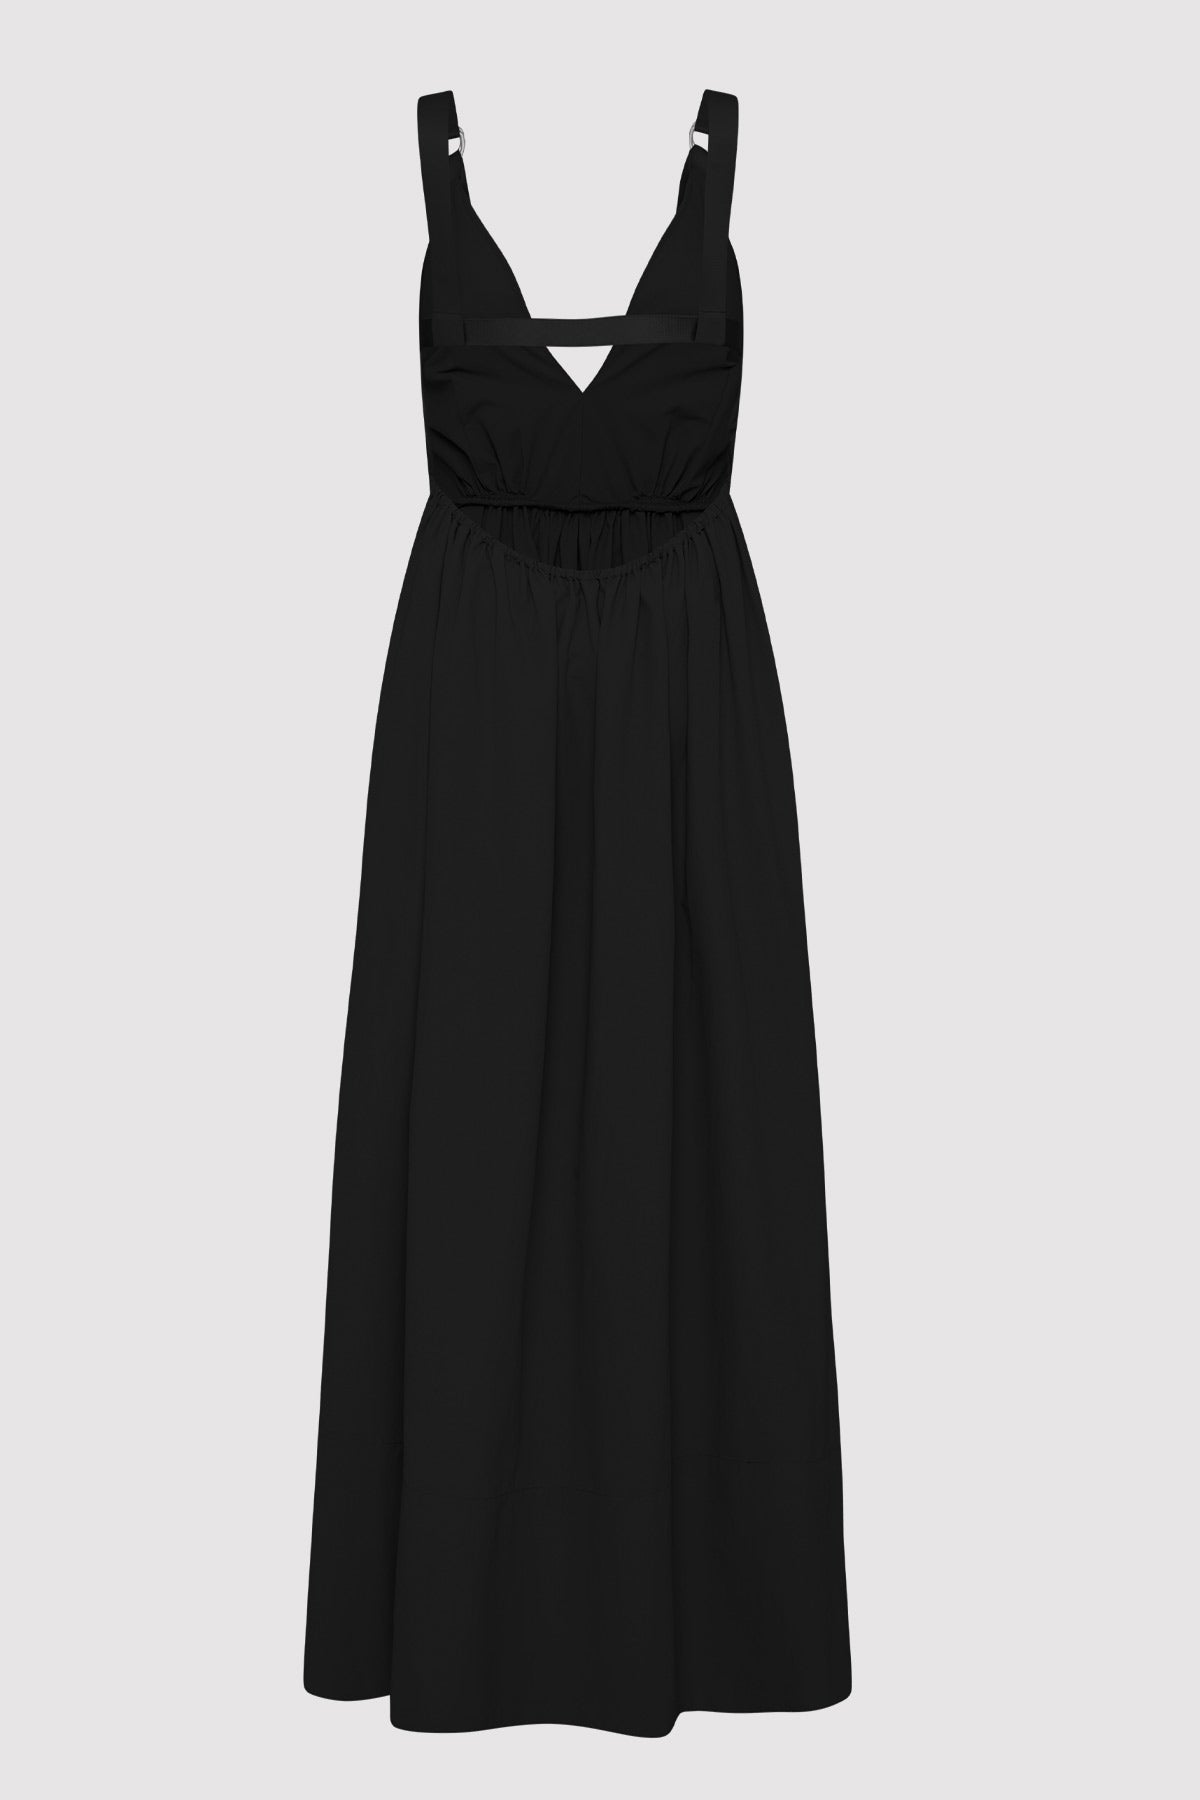 St. Agni | Plunge Sun Dress - Black